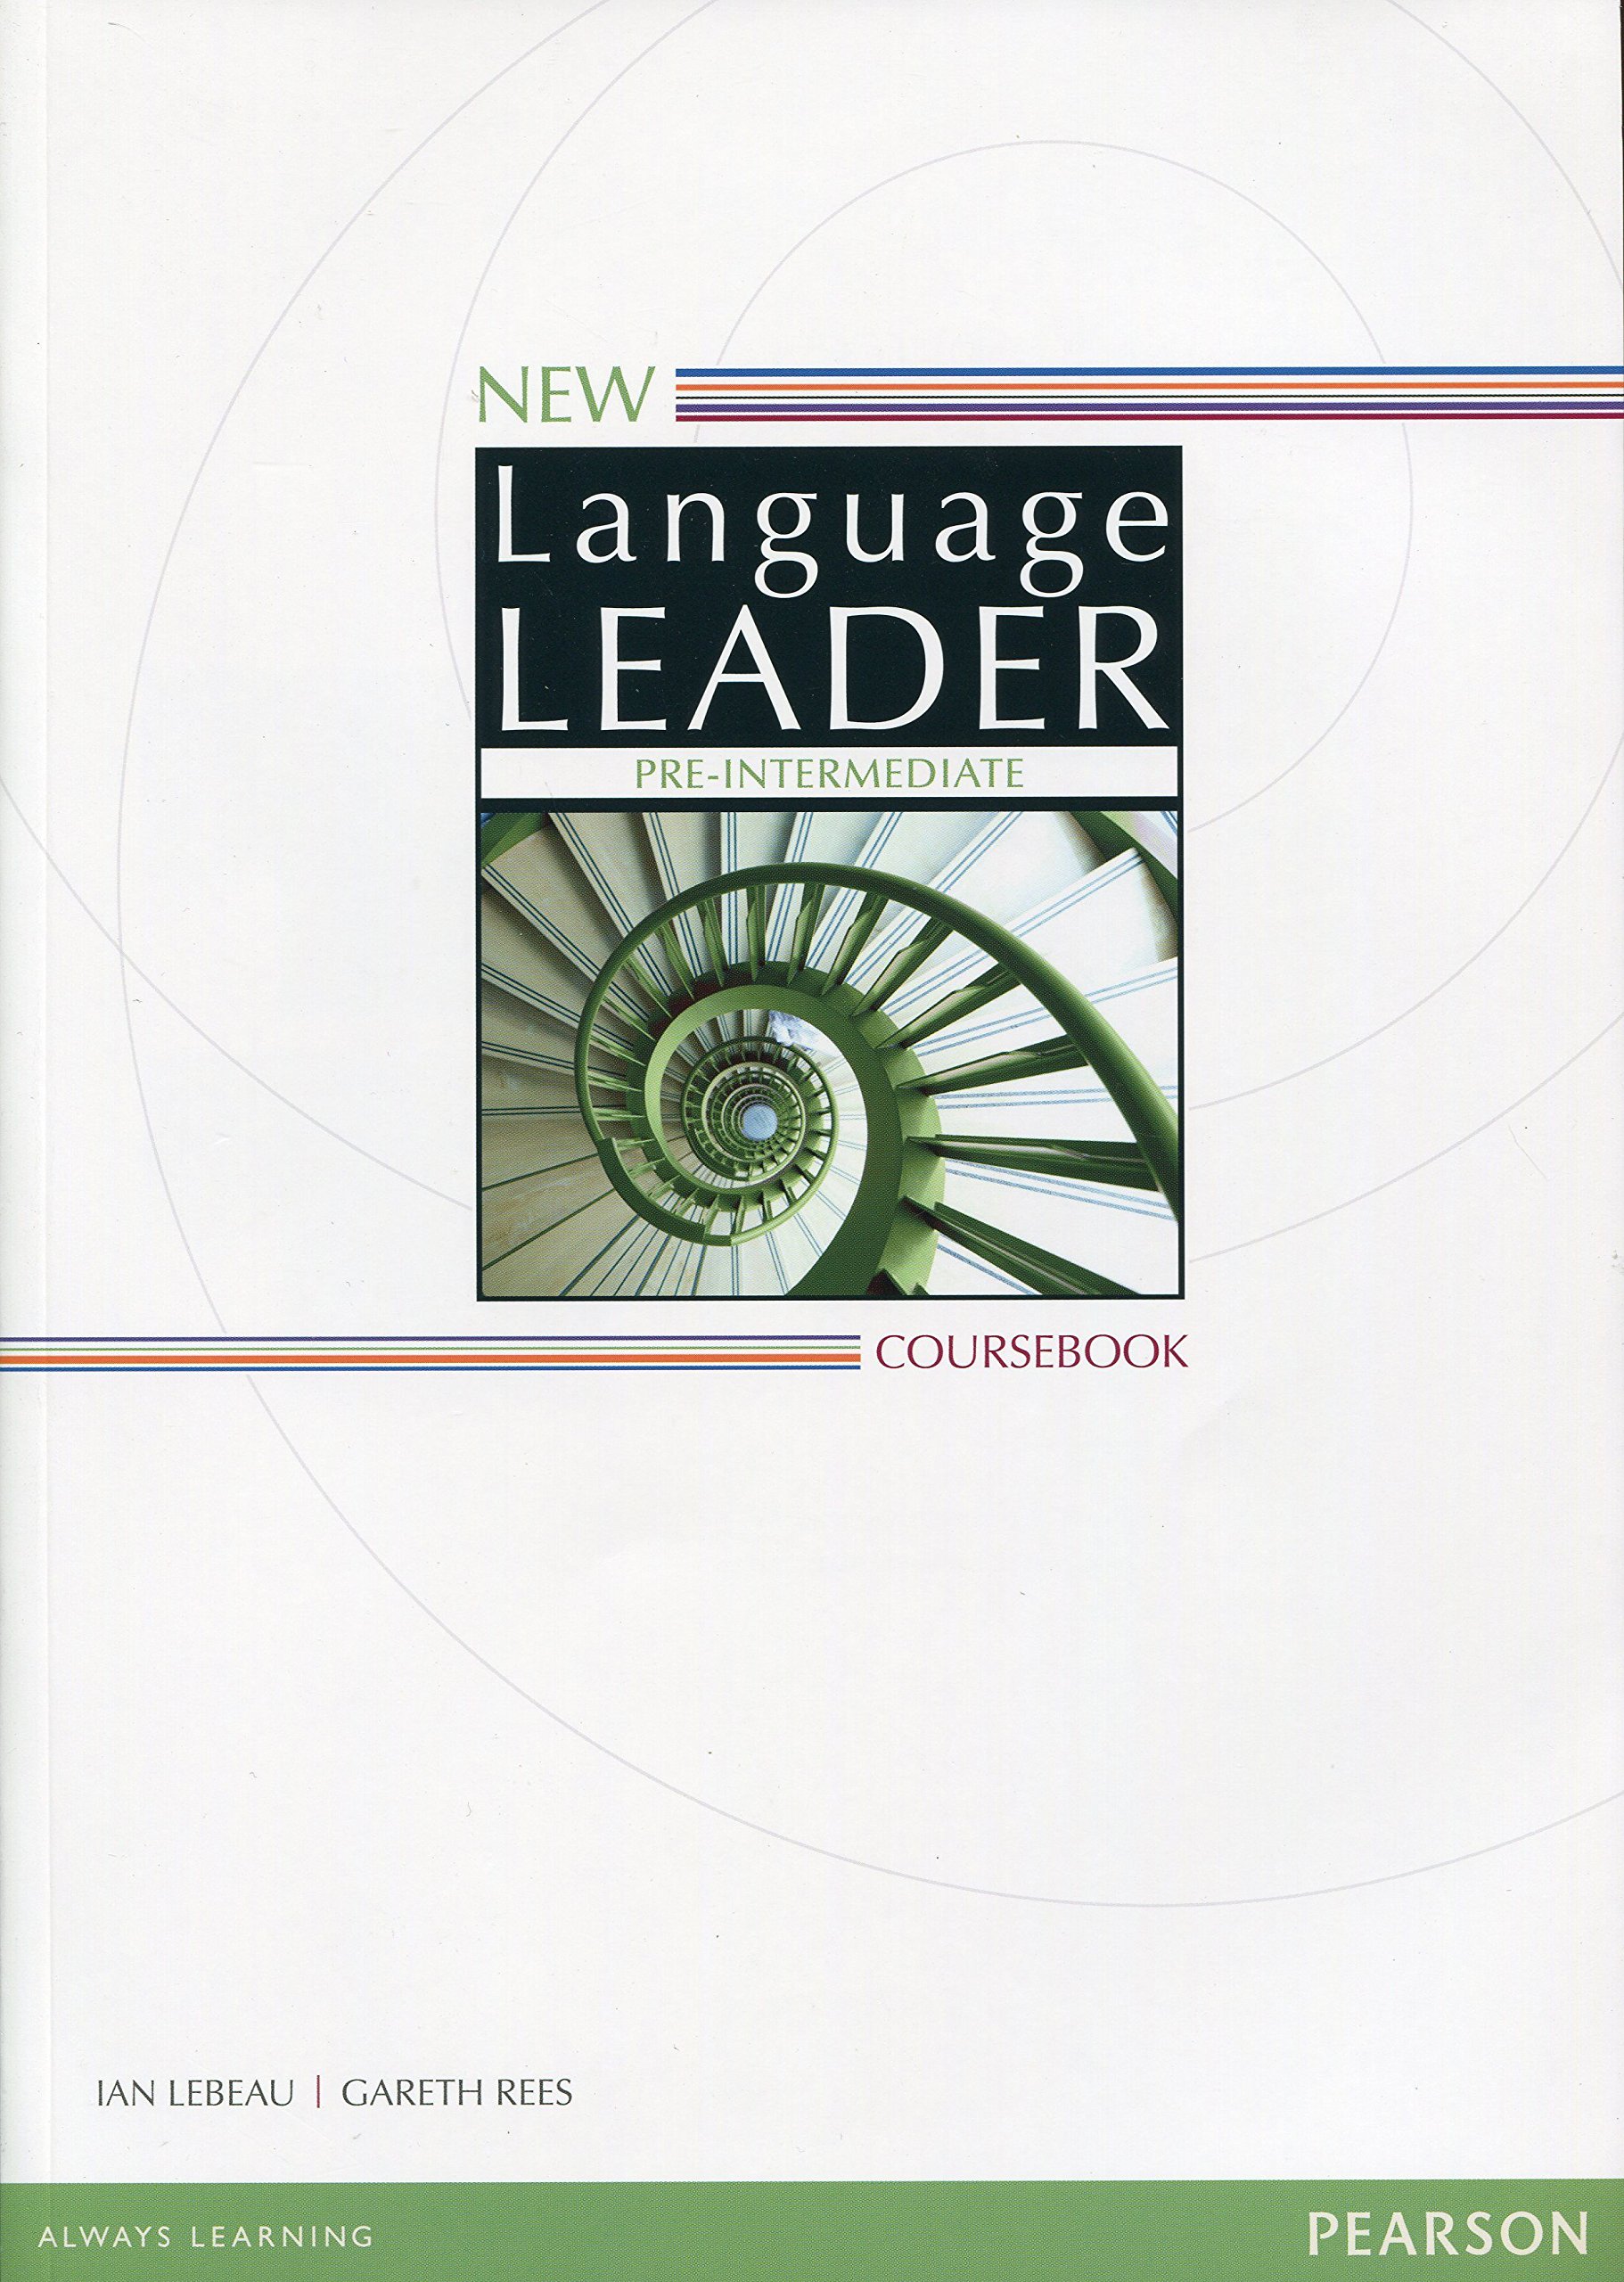 NEW LANGUAGE LEADER PRE-INTERMADIATE Student's  Book